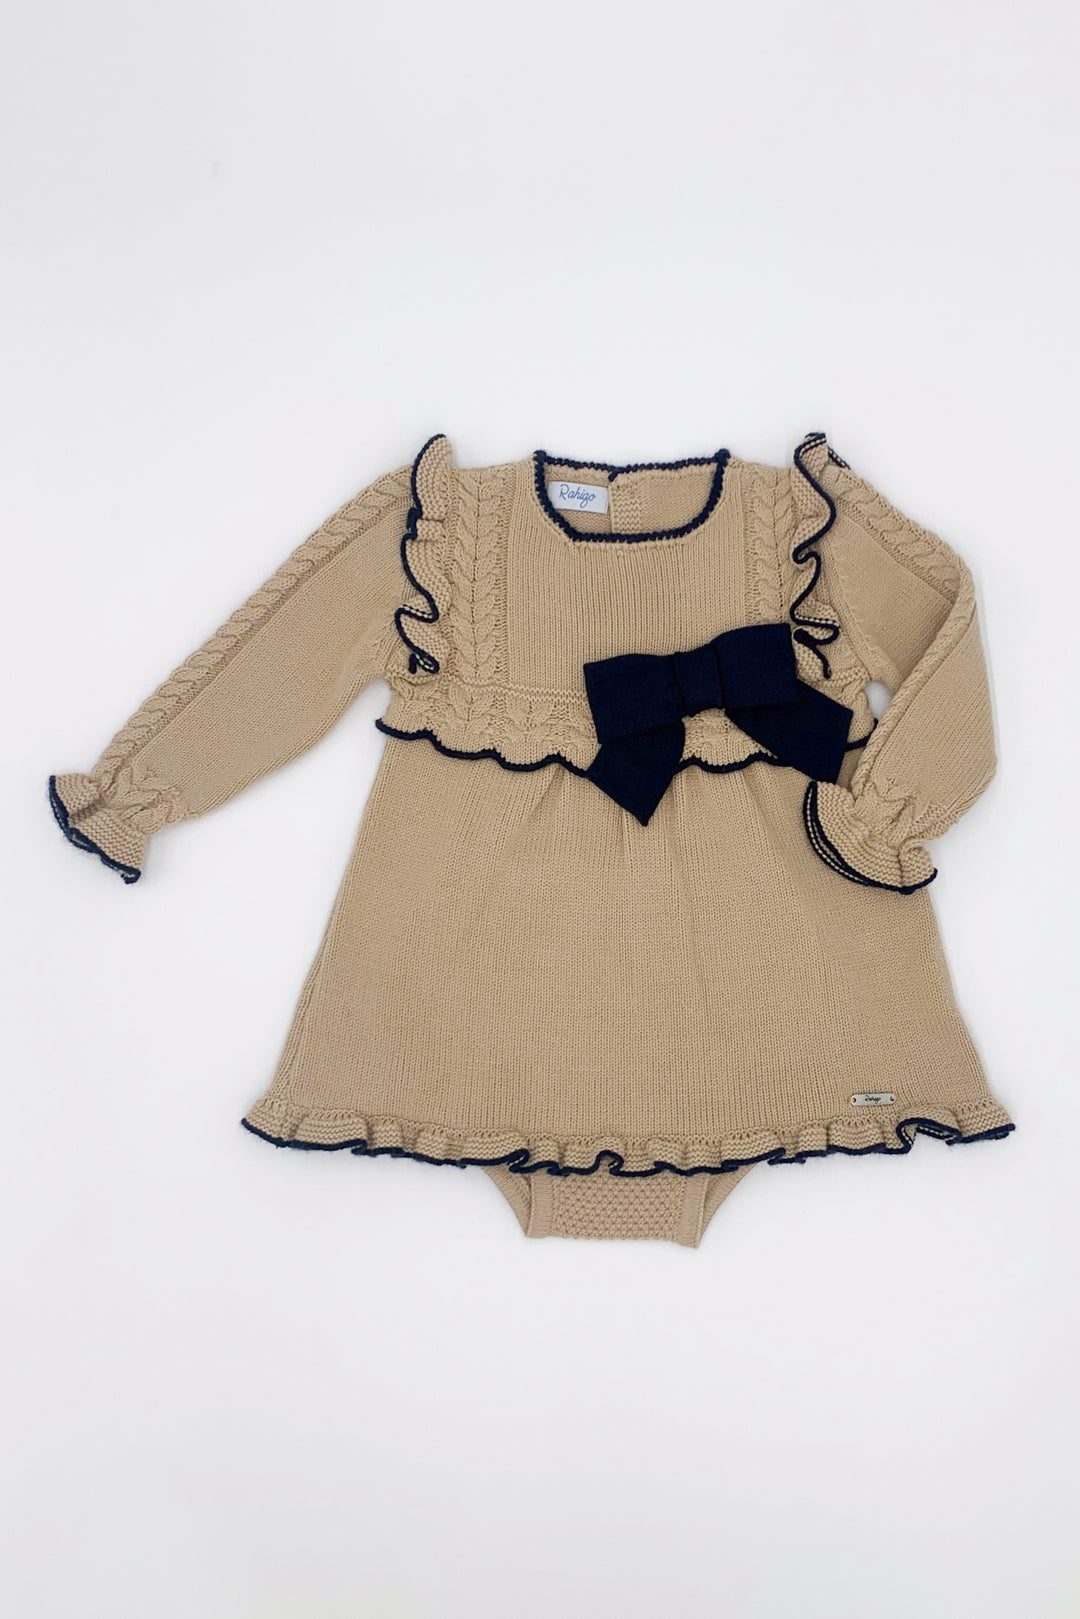 Rahigo PREORDER "Tammy" Camel & Navy Knit Dress | Millie and John